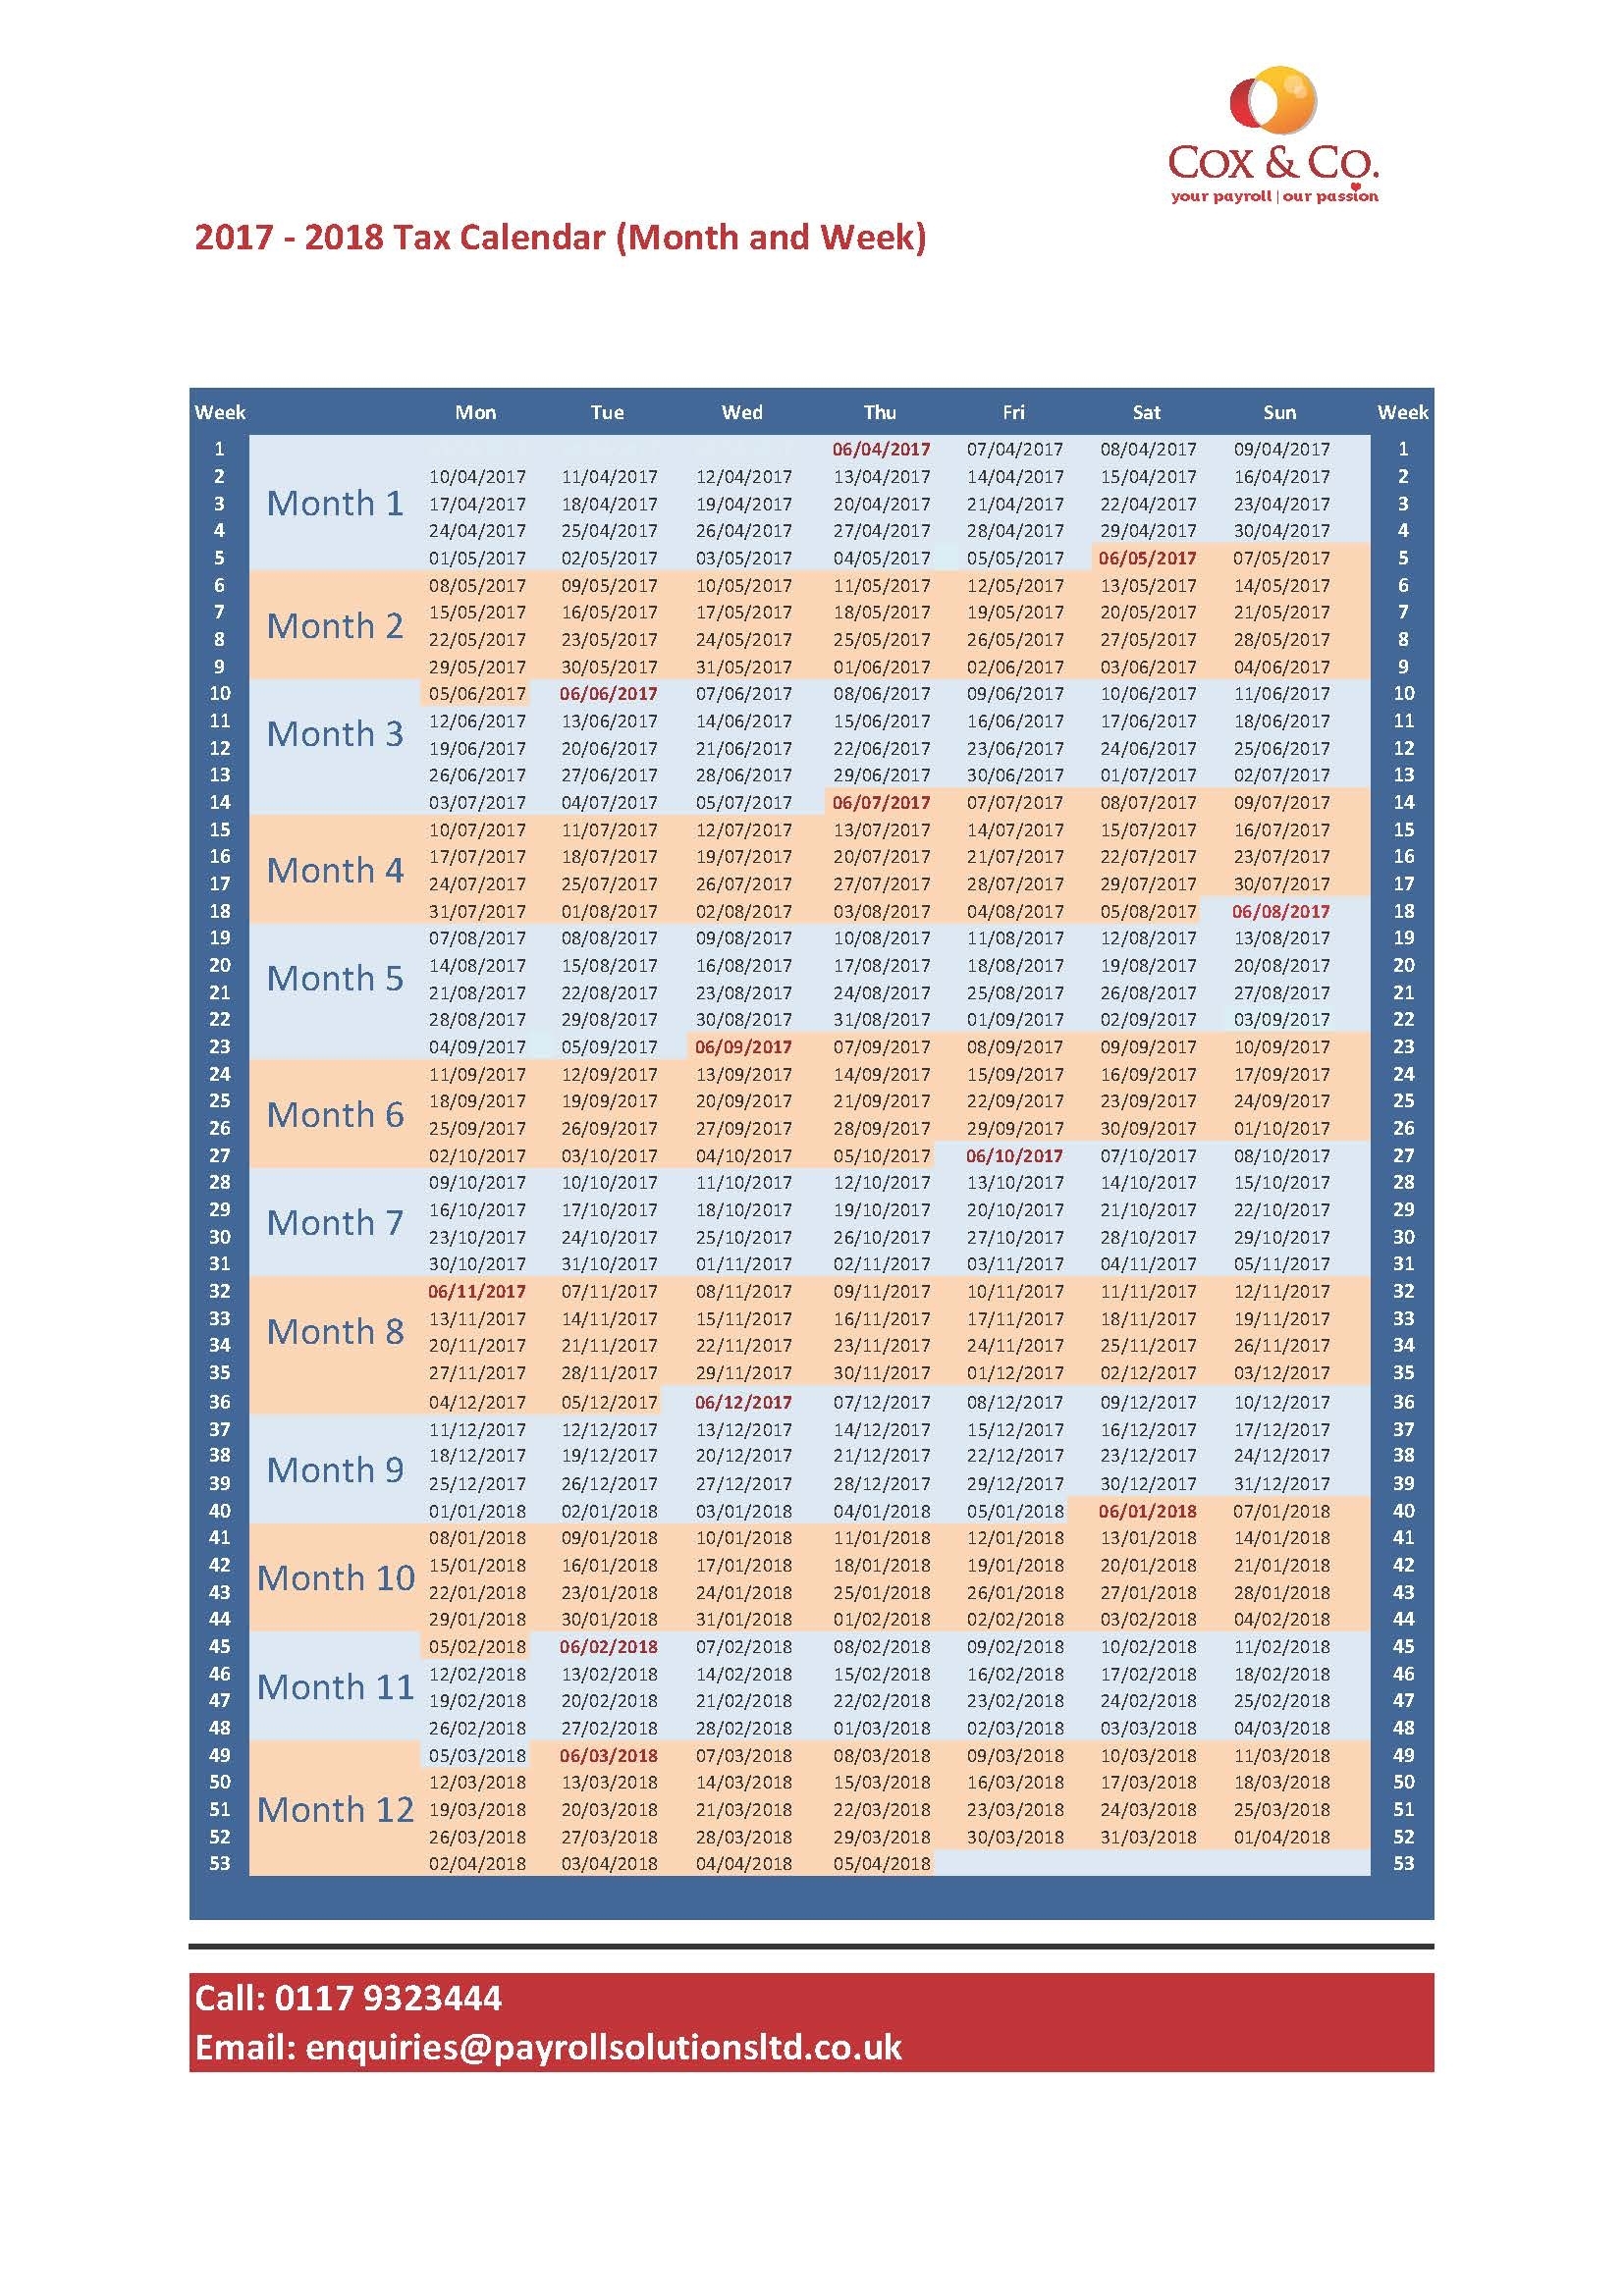 Free Tax Week &amp; Month Payroll Calendar - with regard to Hmrc Tax Calendar 2019/2020